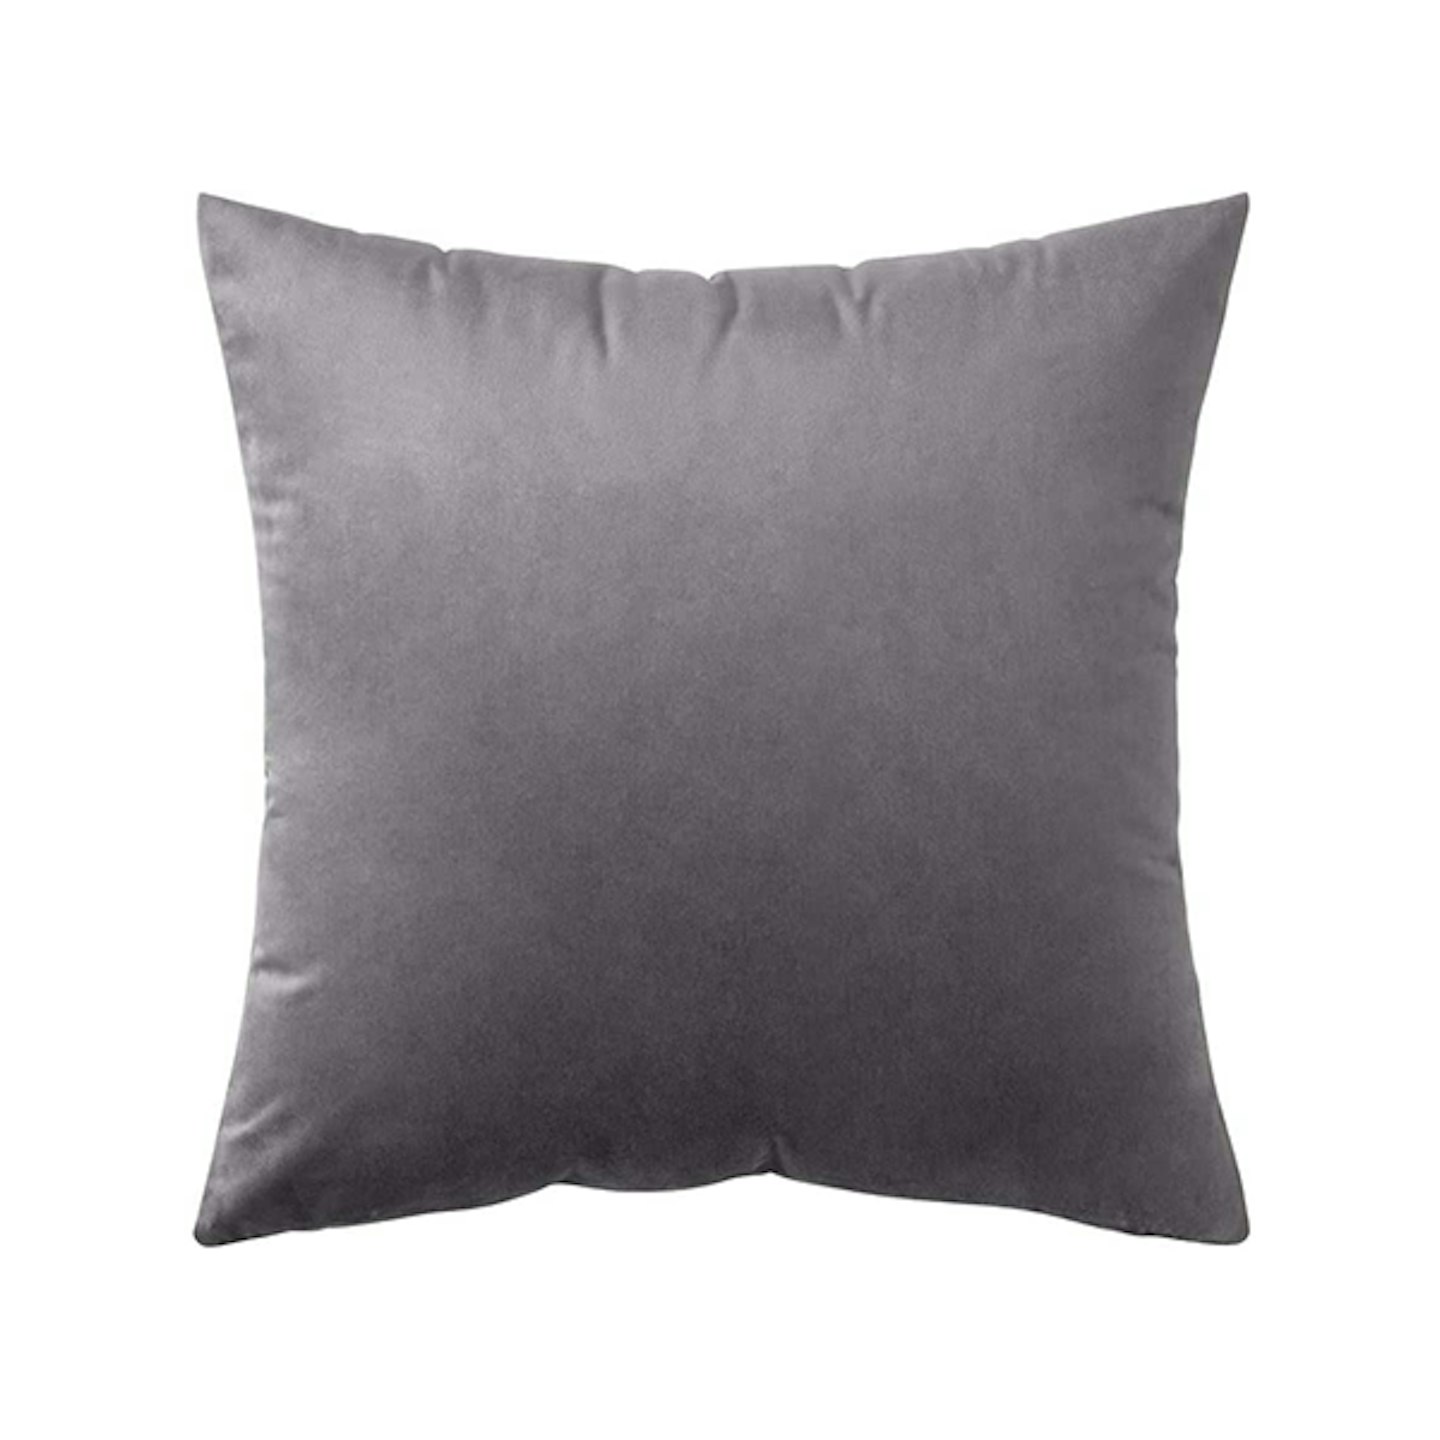 MIULEE Pack of 2 Velvet Soft Soild Microfiber Decorative Square Pillow Case